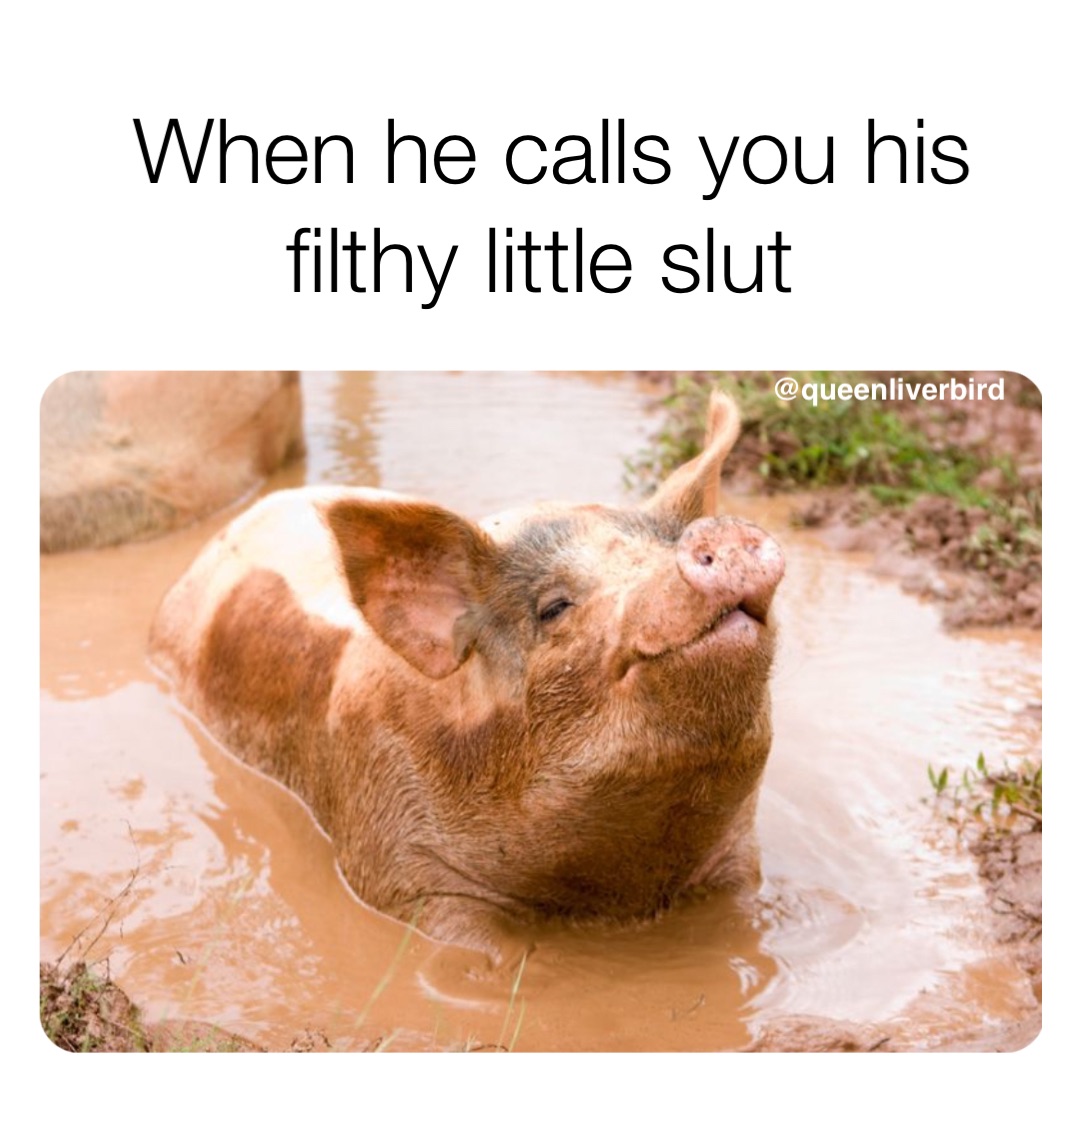 When he calls you his filthy little slut @queenliverbird